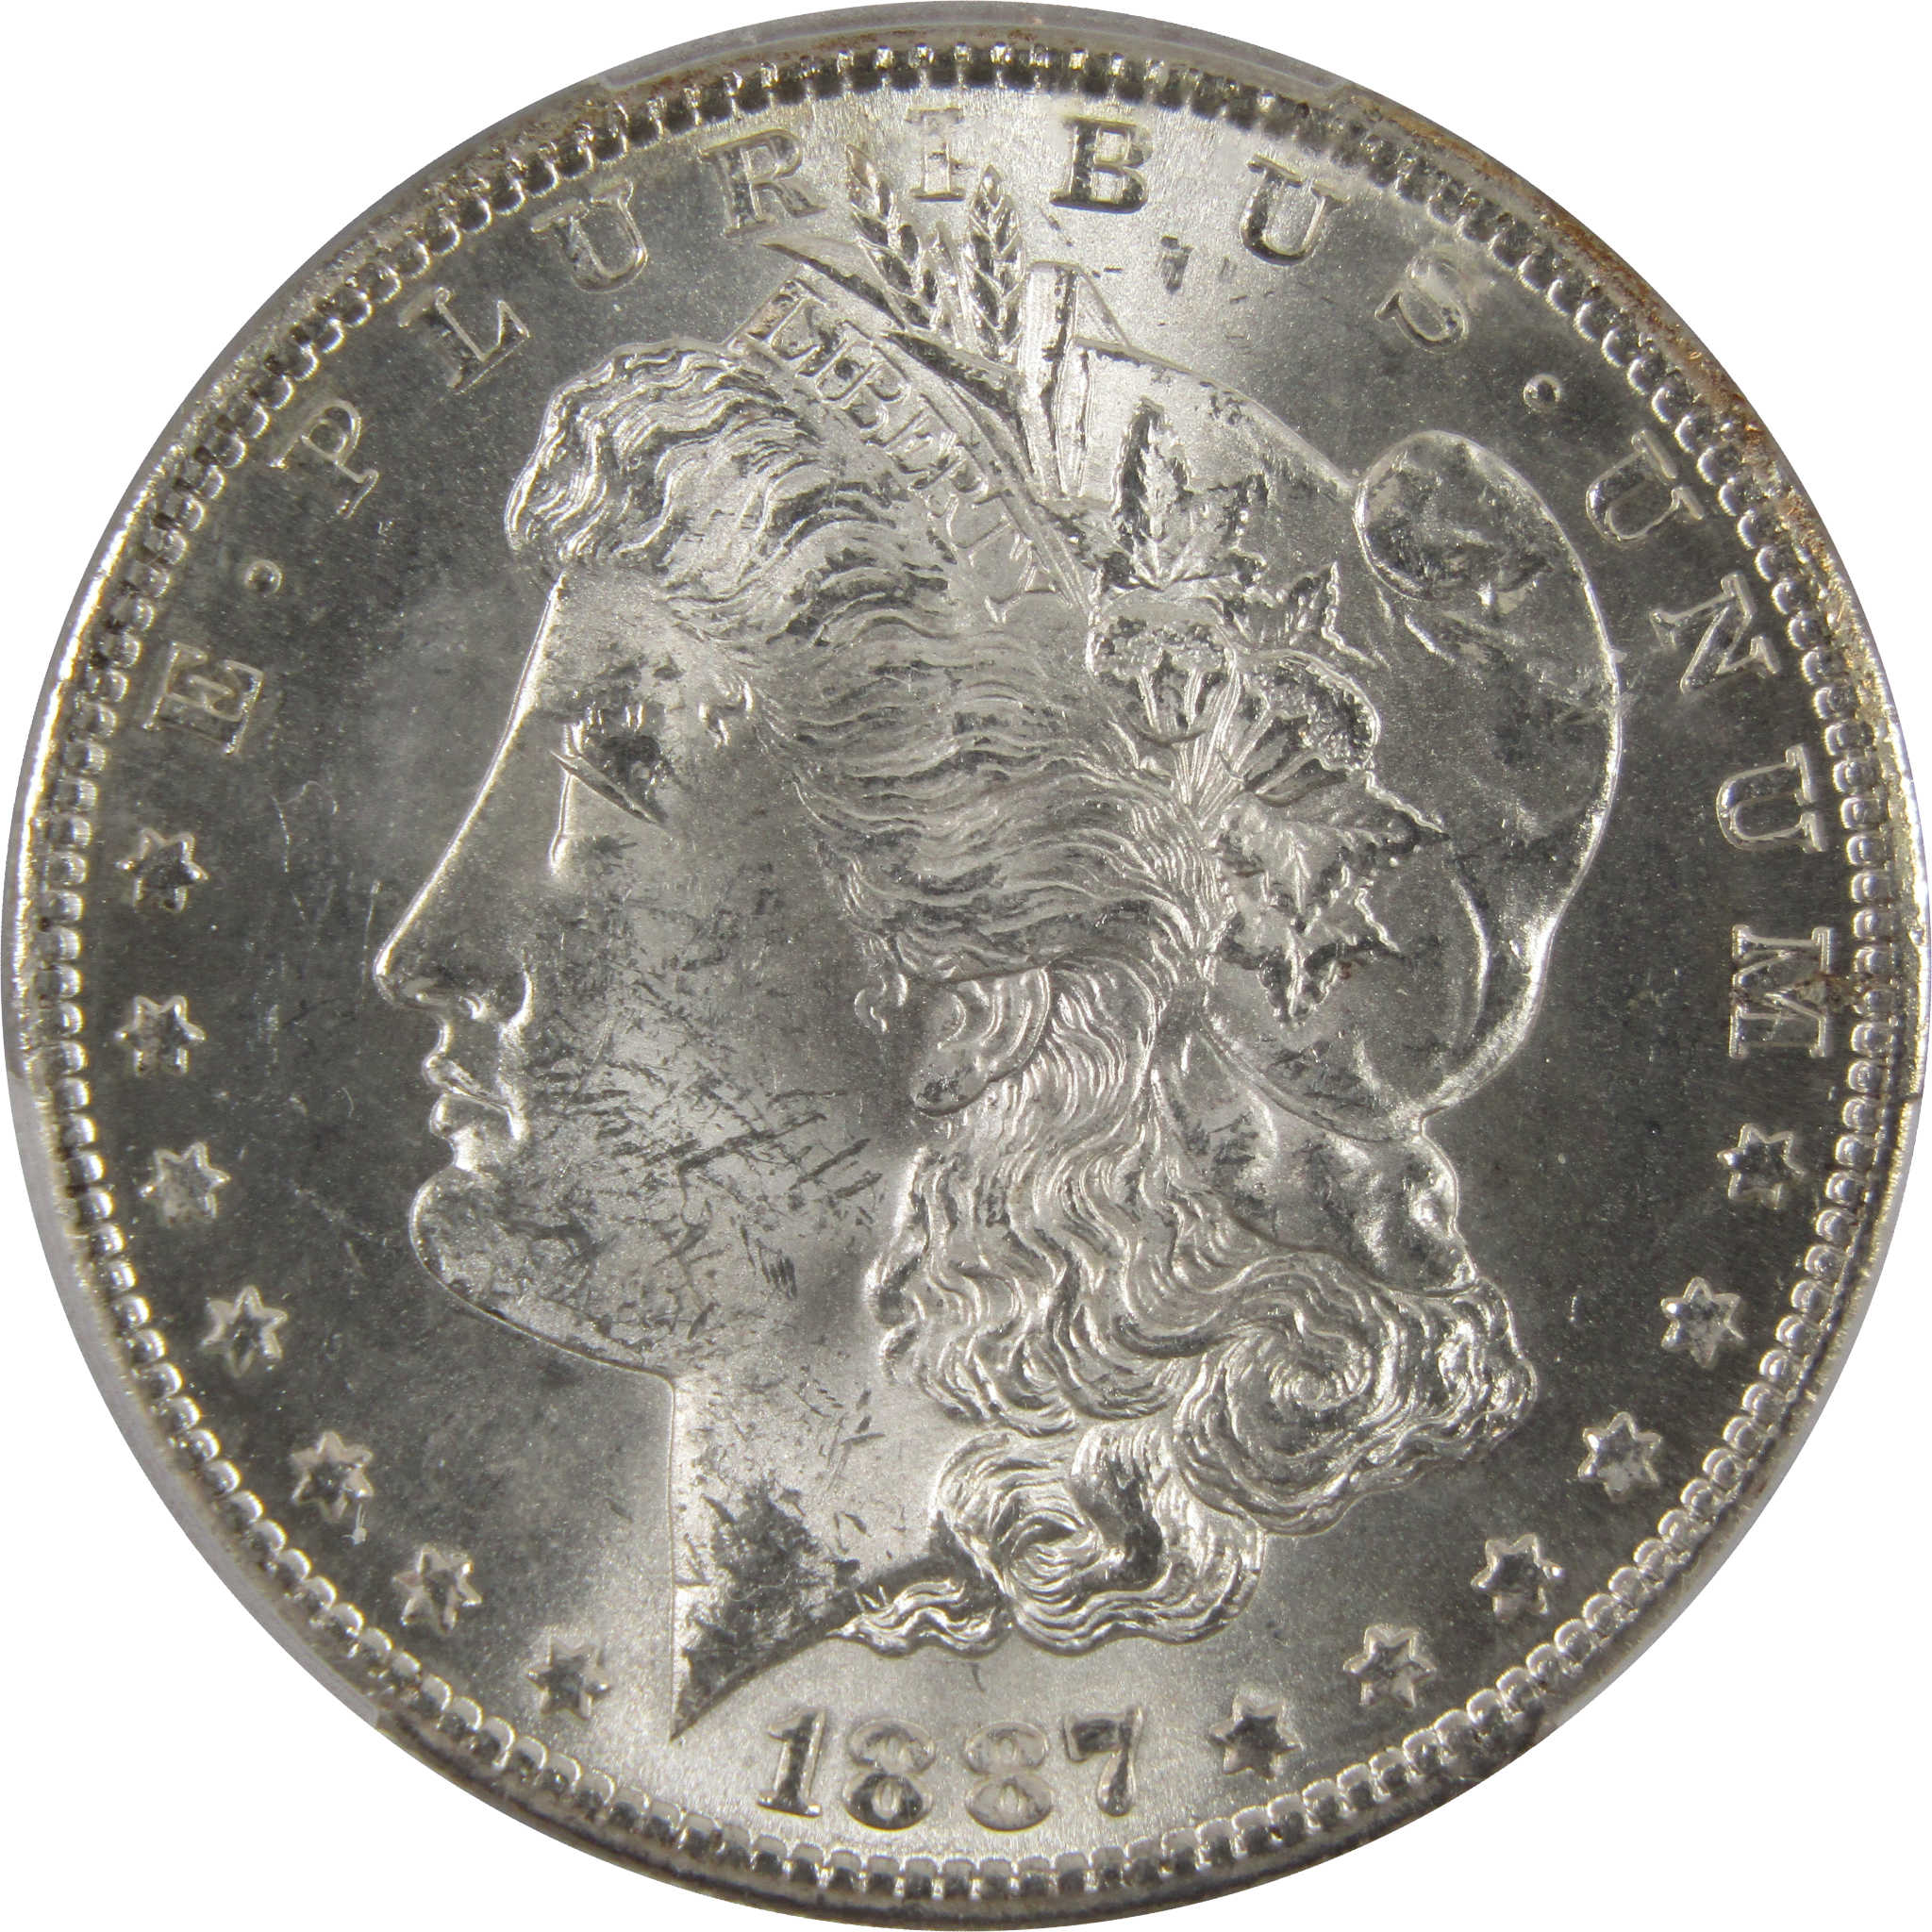 1887 S Morgan Dollar MS 63 PCGS 90% Silver $1 Unc SKU:I7547 - Morgan coin - Morgan silver dollar - Morgan silver dollar for sale - Profile Coins &amp; Collectibles